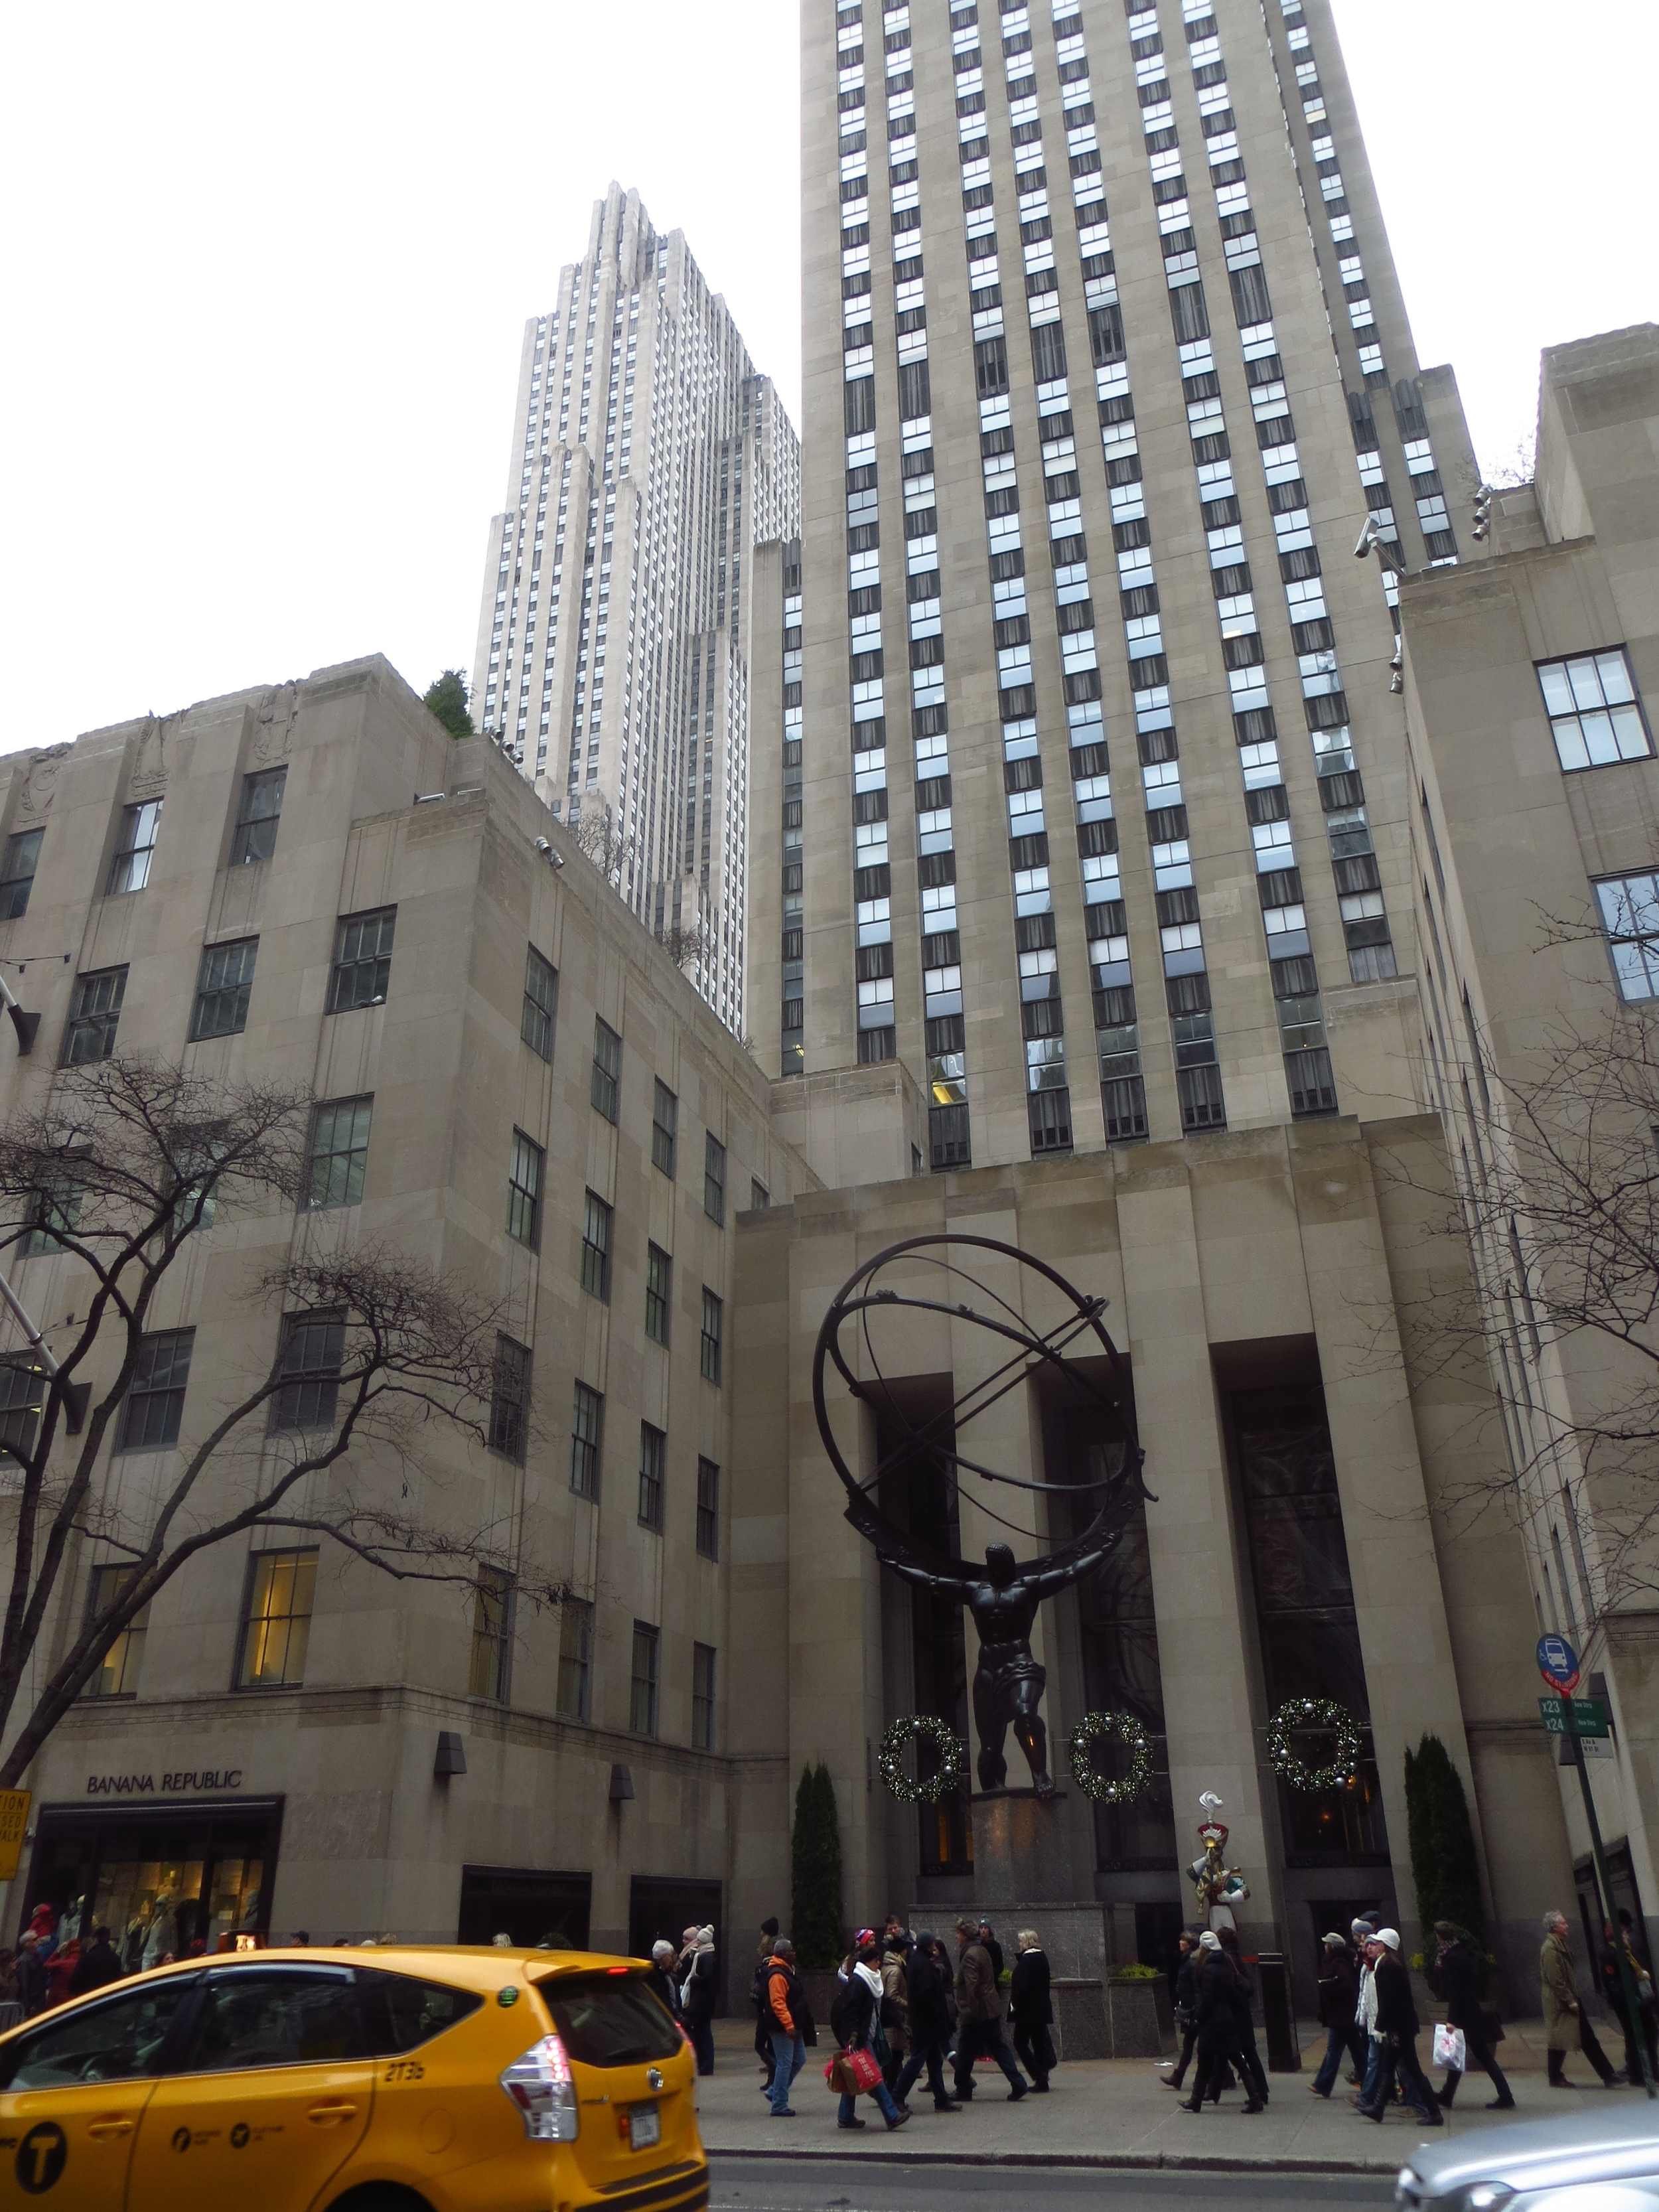 Atlas and Rockefeller Center